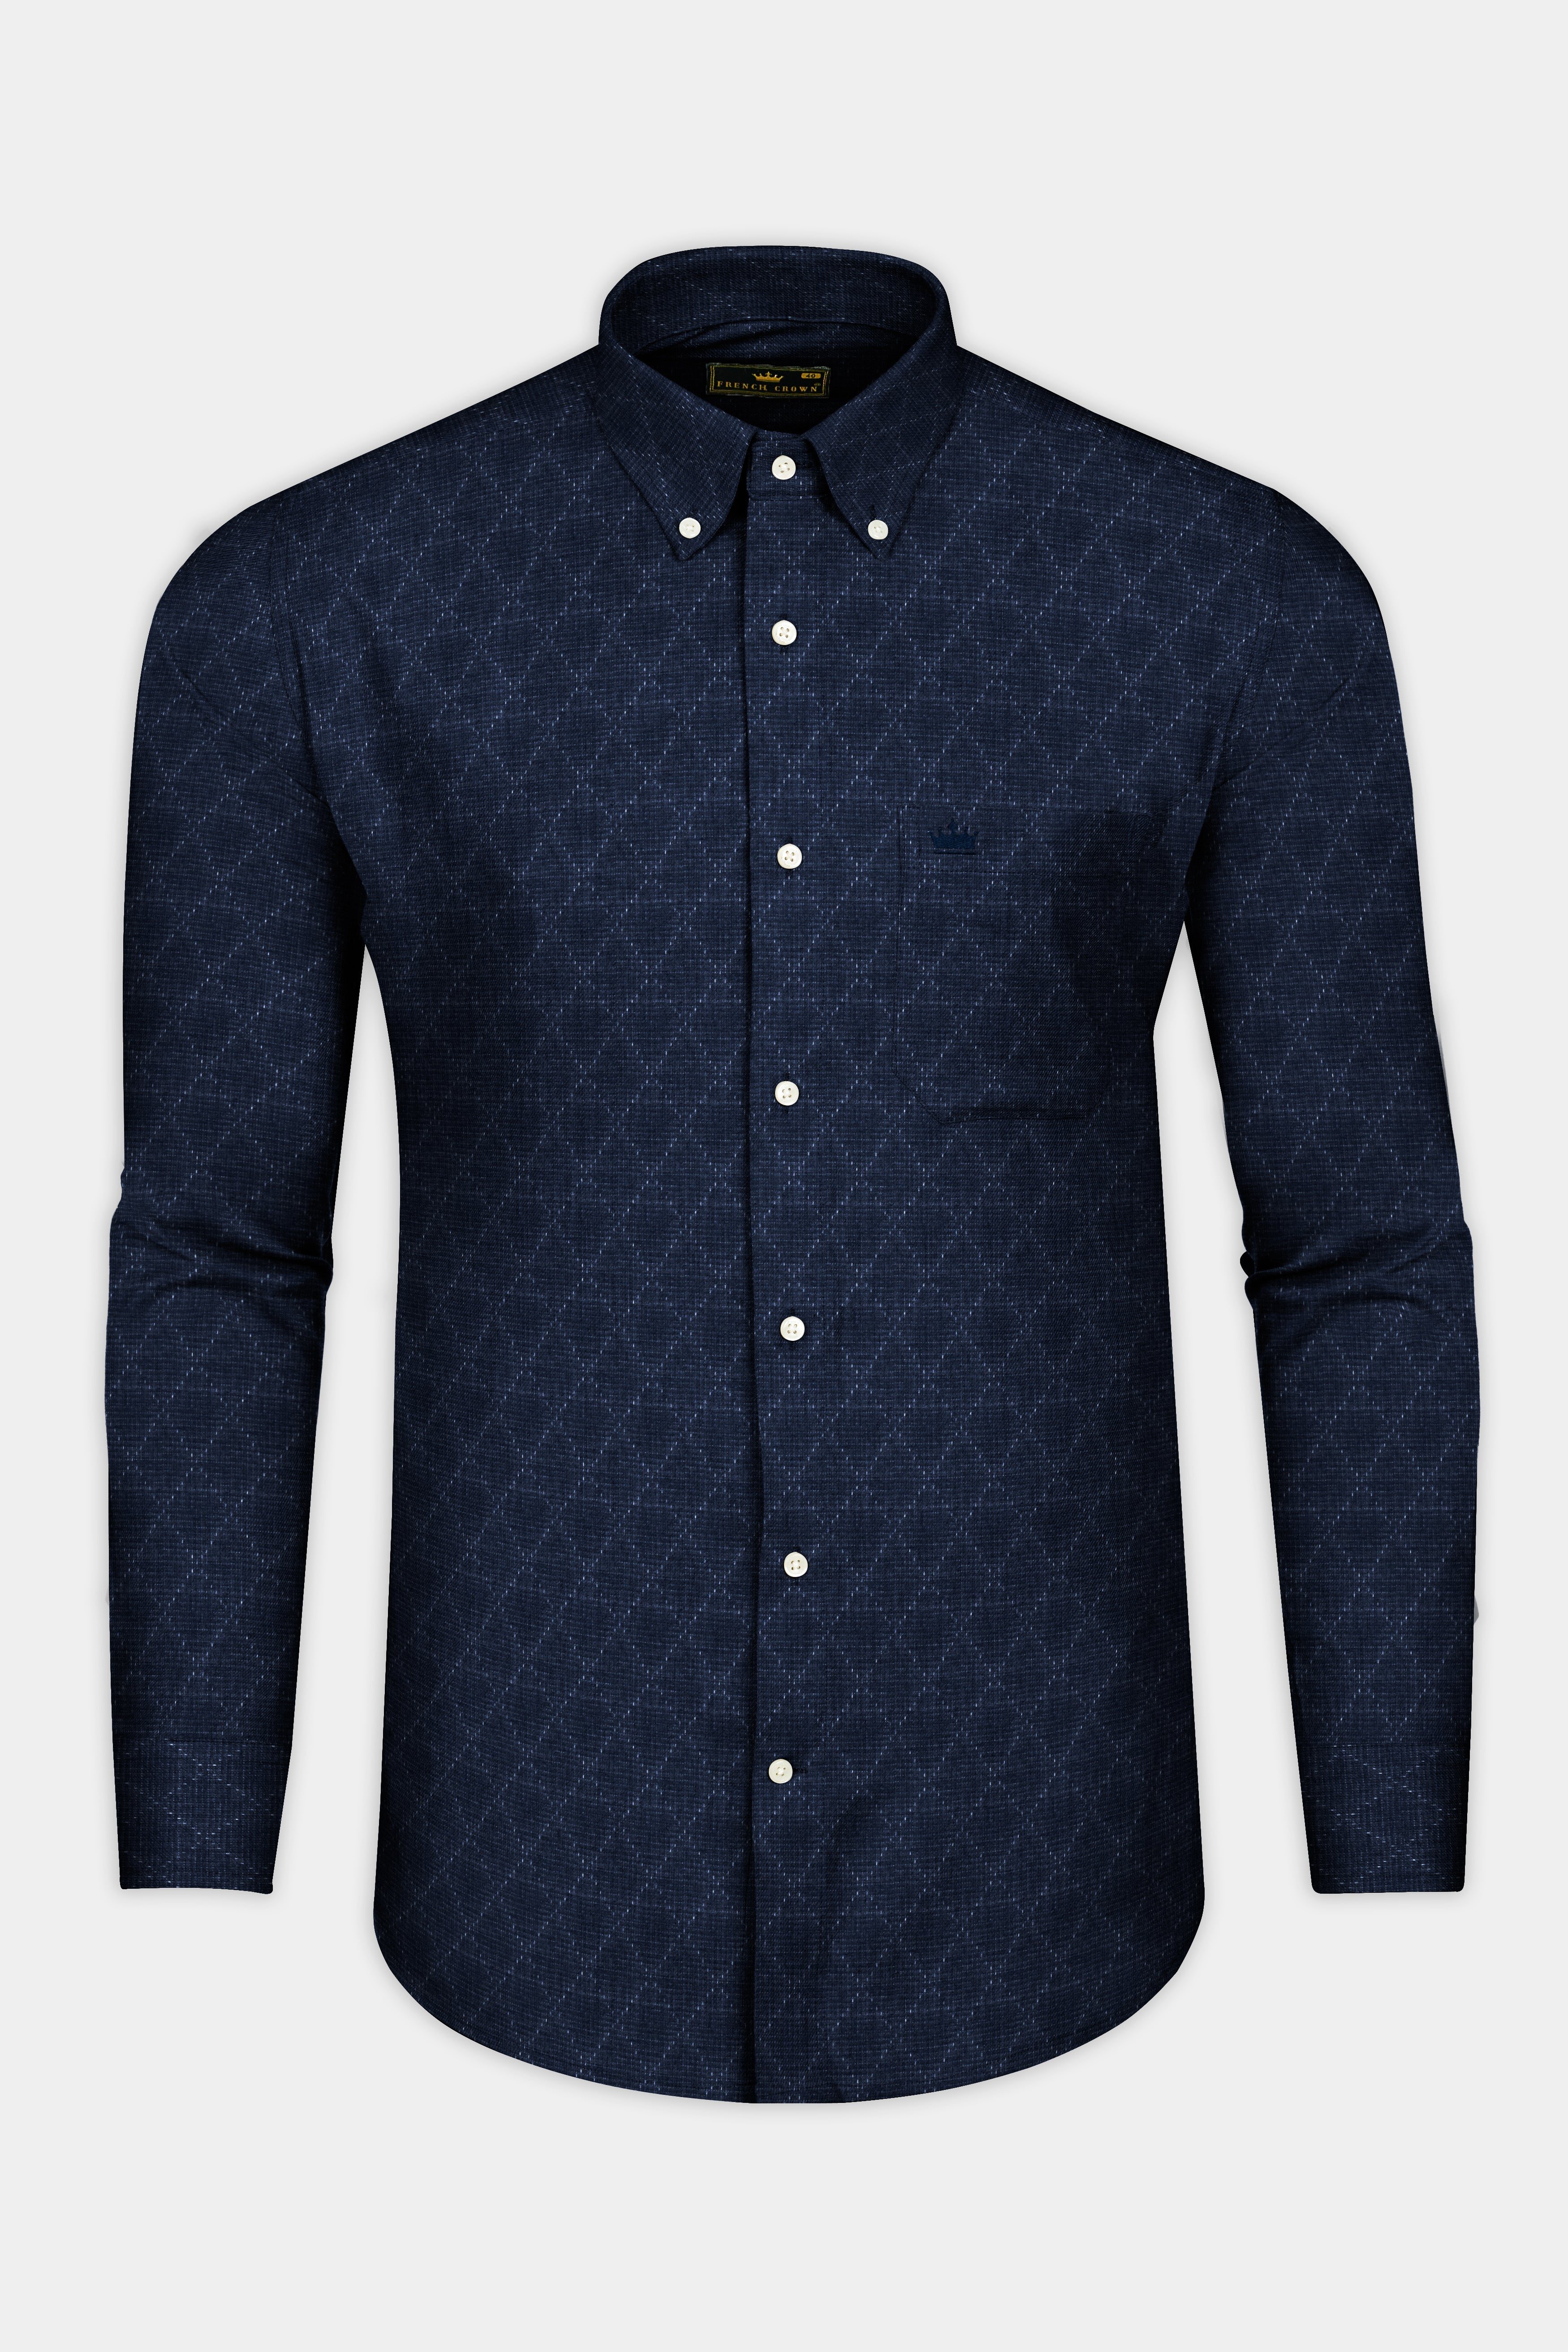 Vulcan Blue Dobby Textured Premium Cotton Shirt